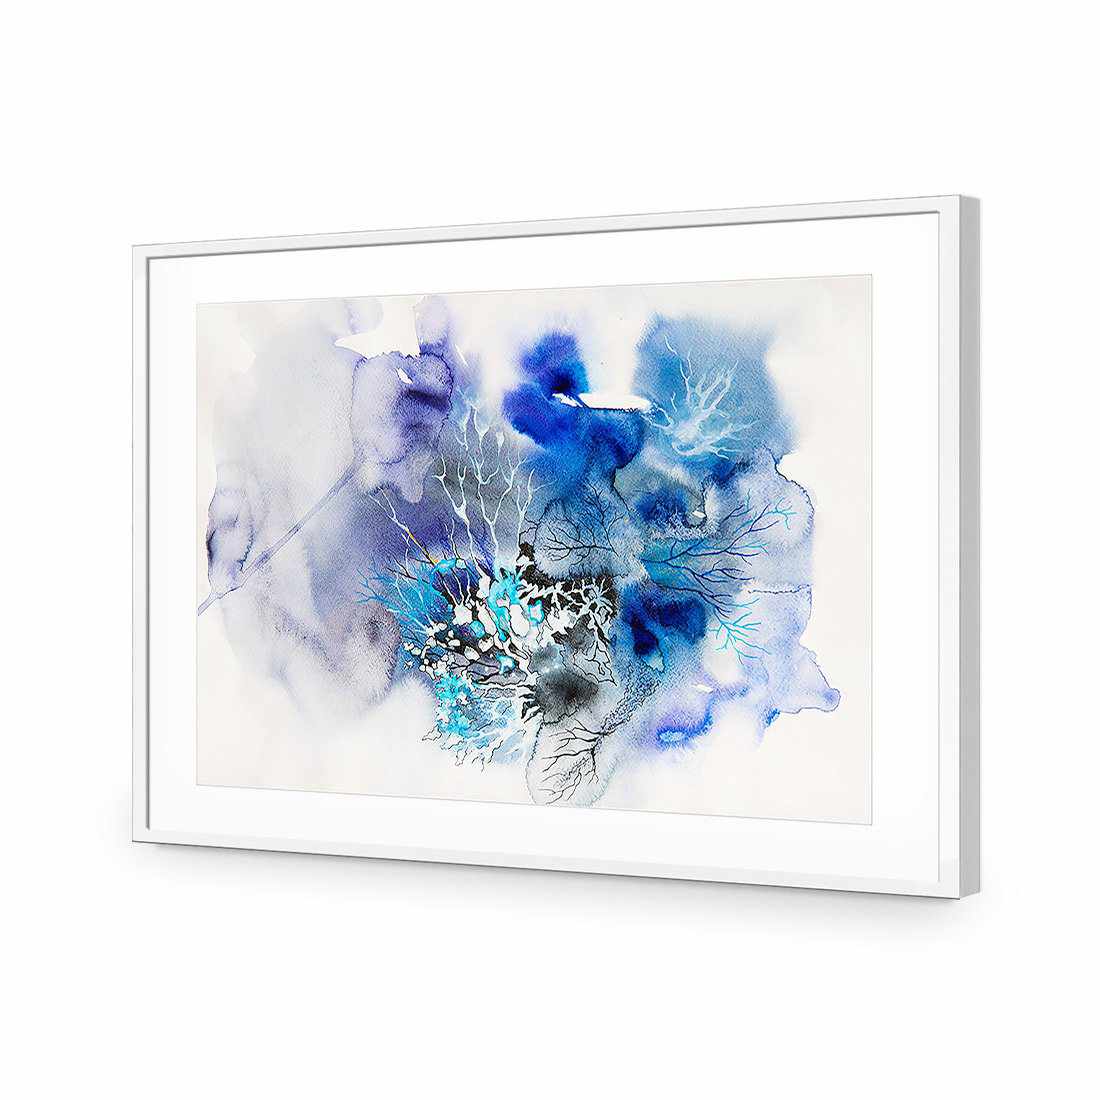 Veins Of Life, Blue-Acrylic-Wall Art Design-With Border-Acrylic - White Frame-45x30cm-Wall Art Designs